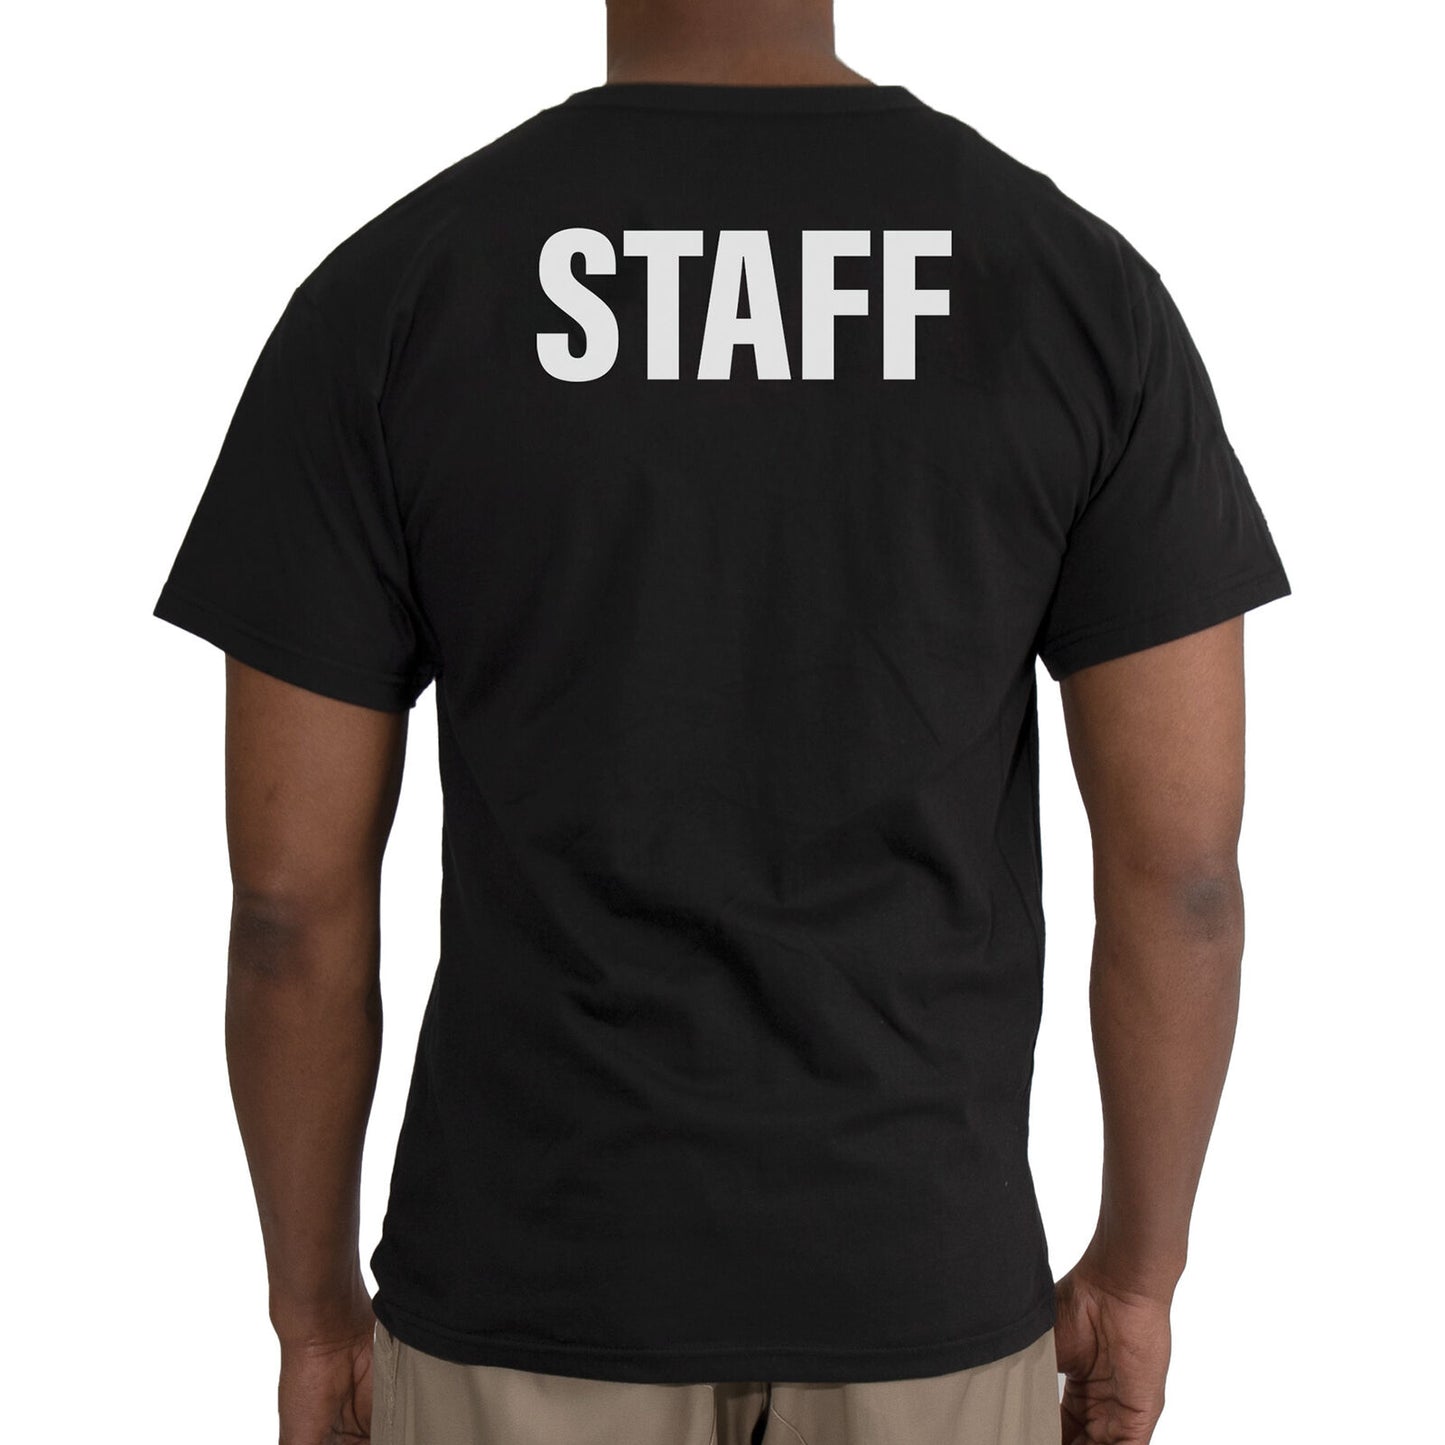 Men's 2-Sided "STAFF" T-Shirt in Black